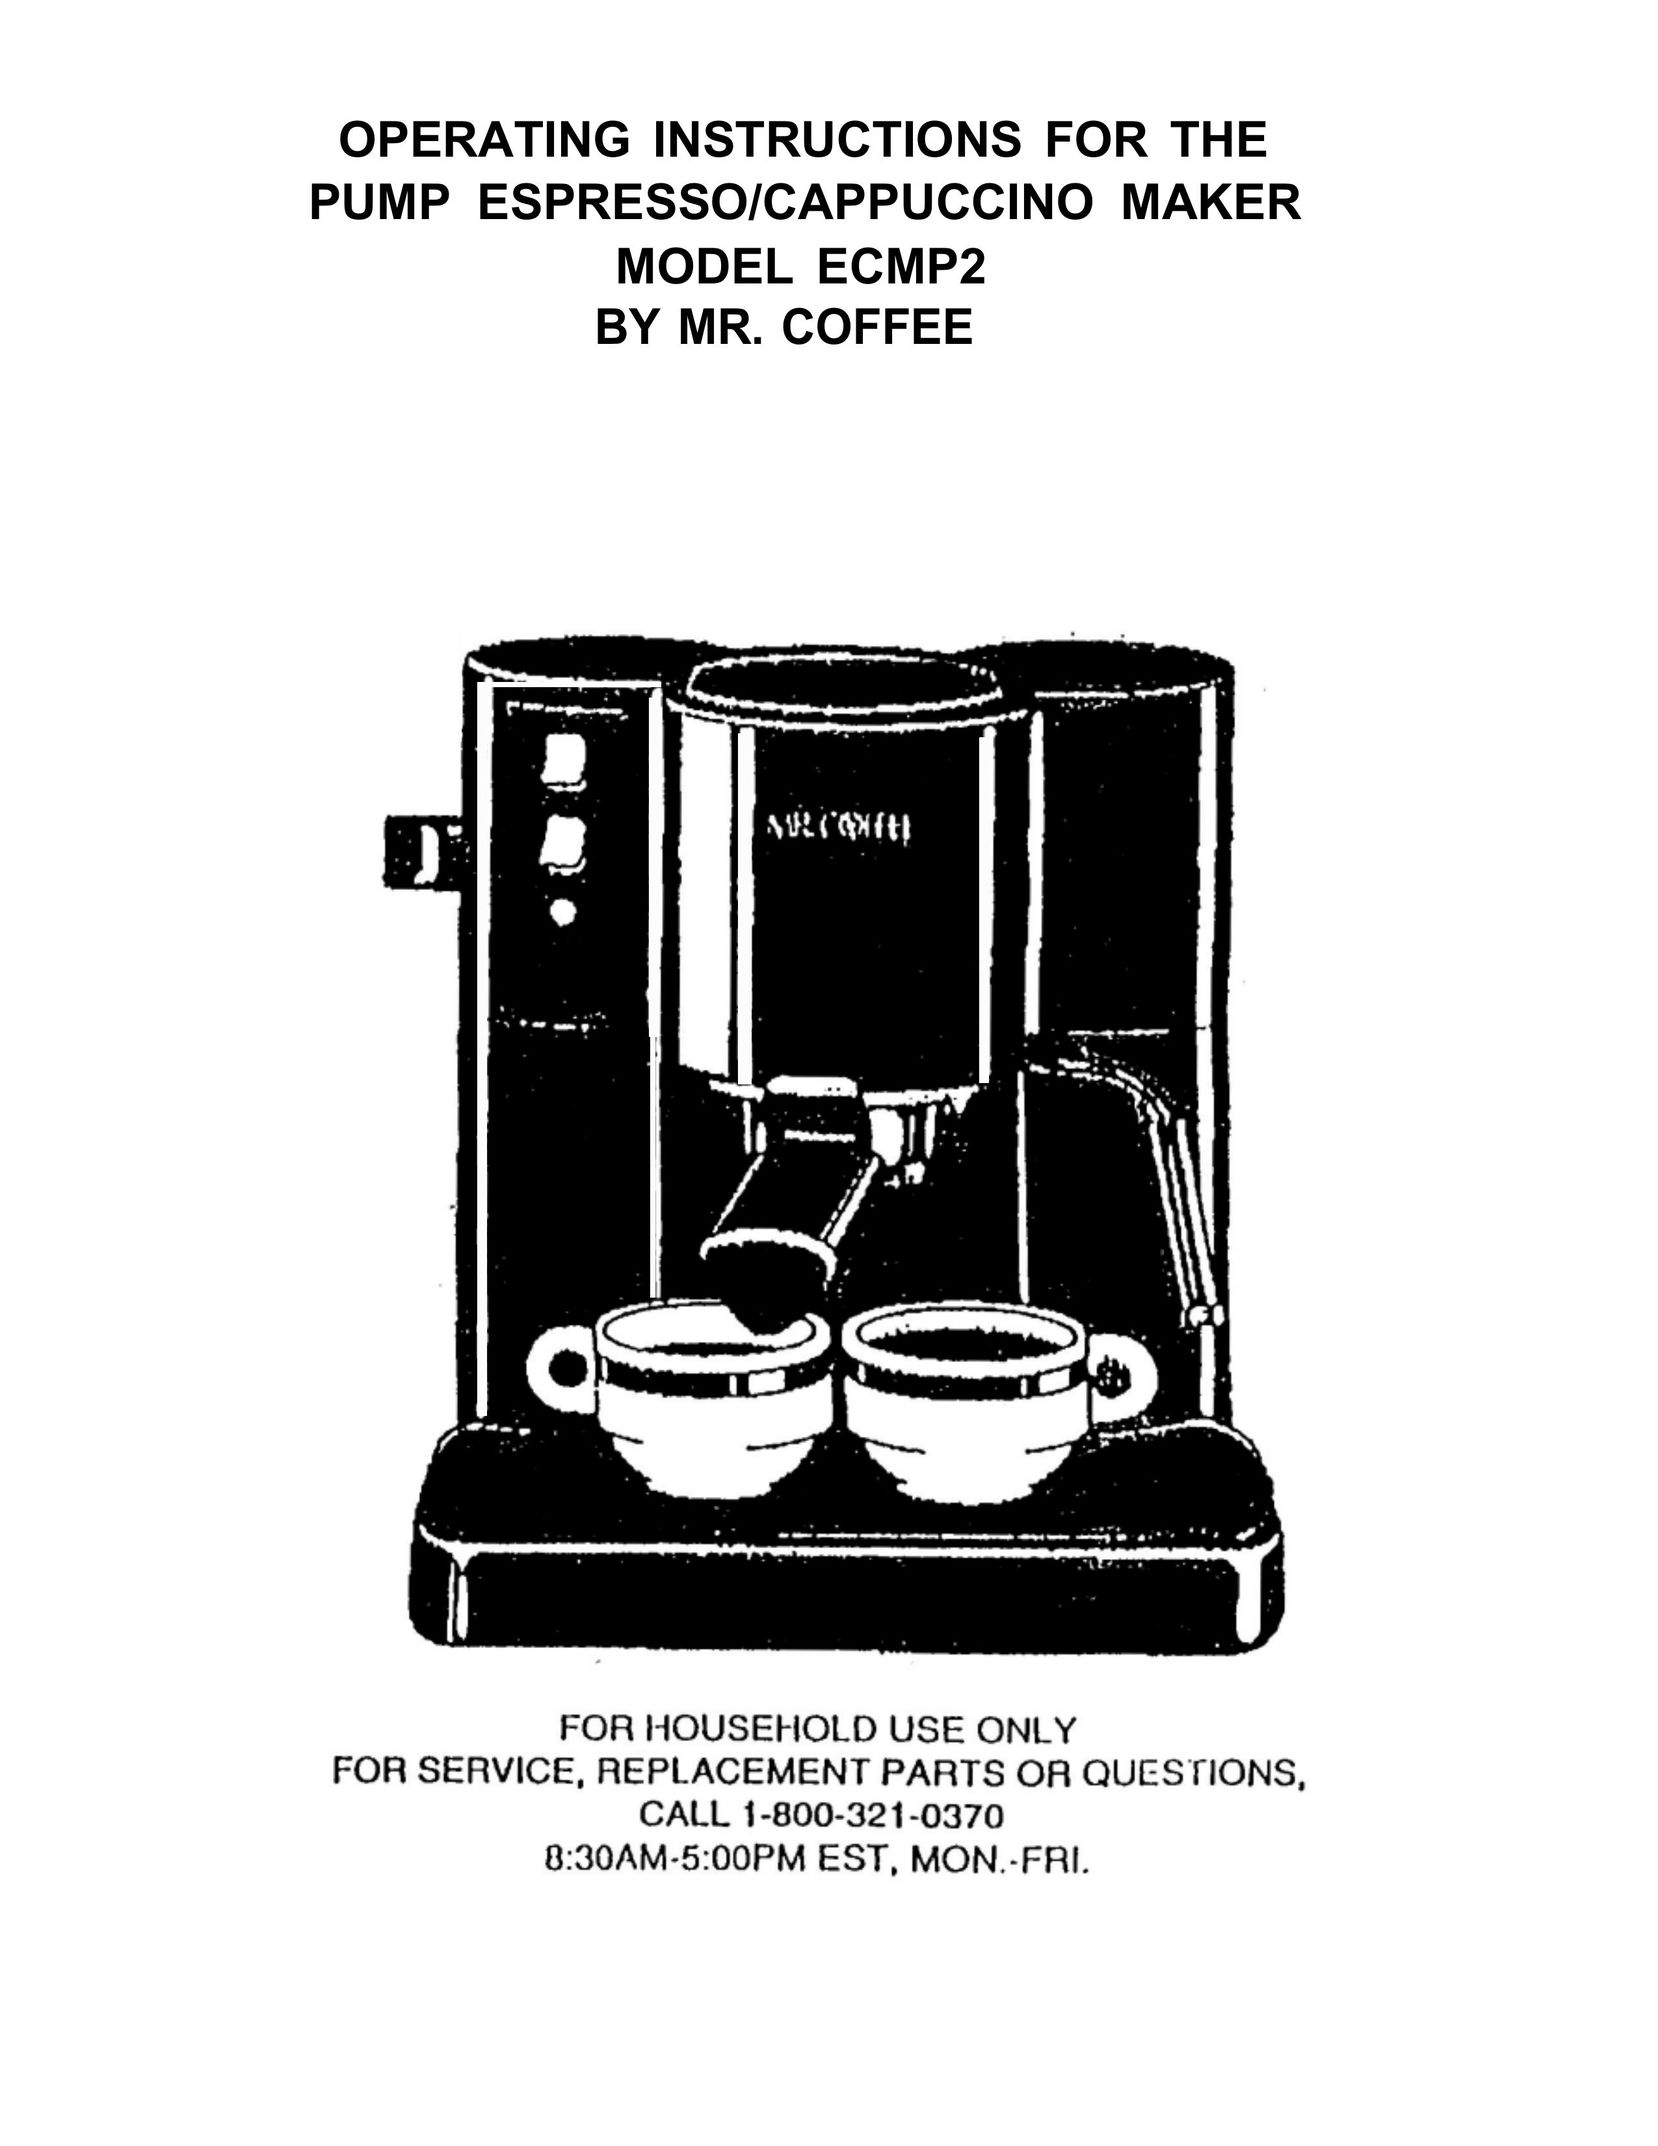 Mr. Coffee ECMP2 Espresso Maker User Manual